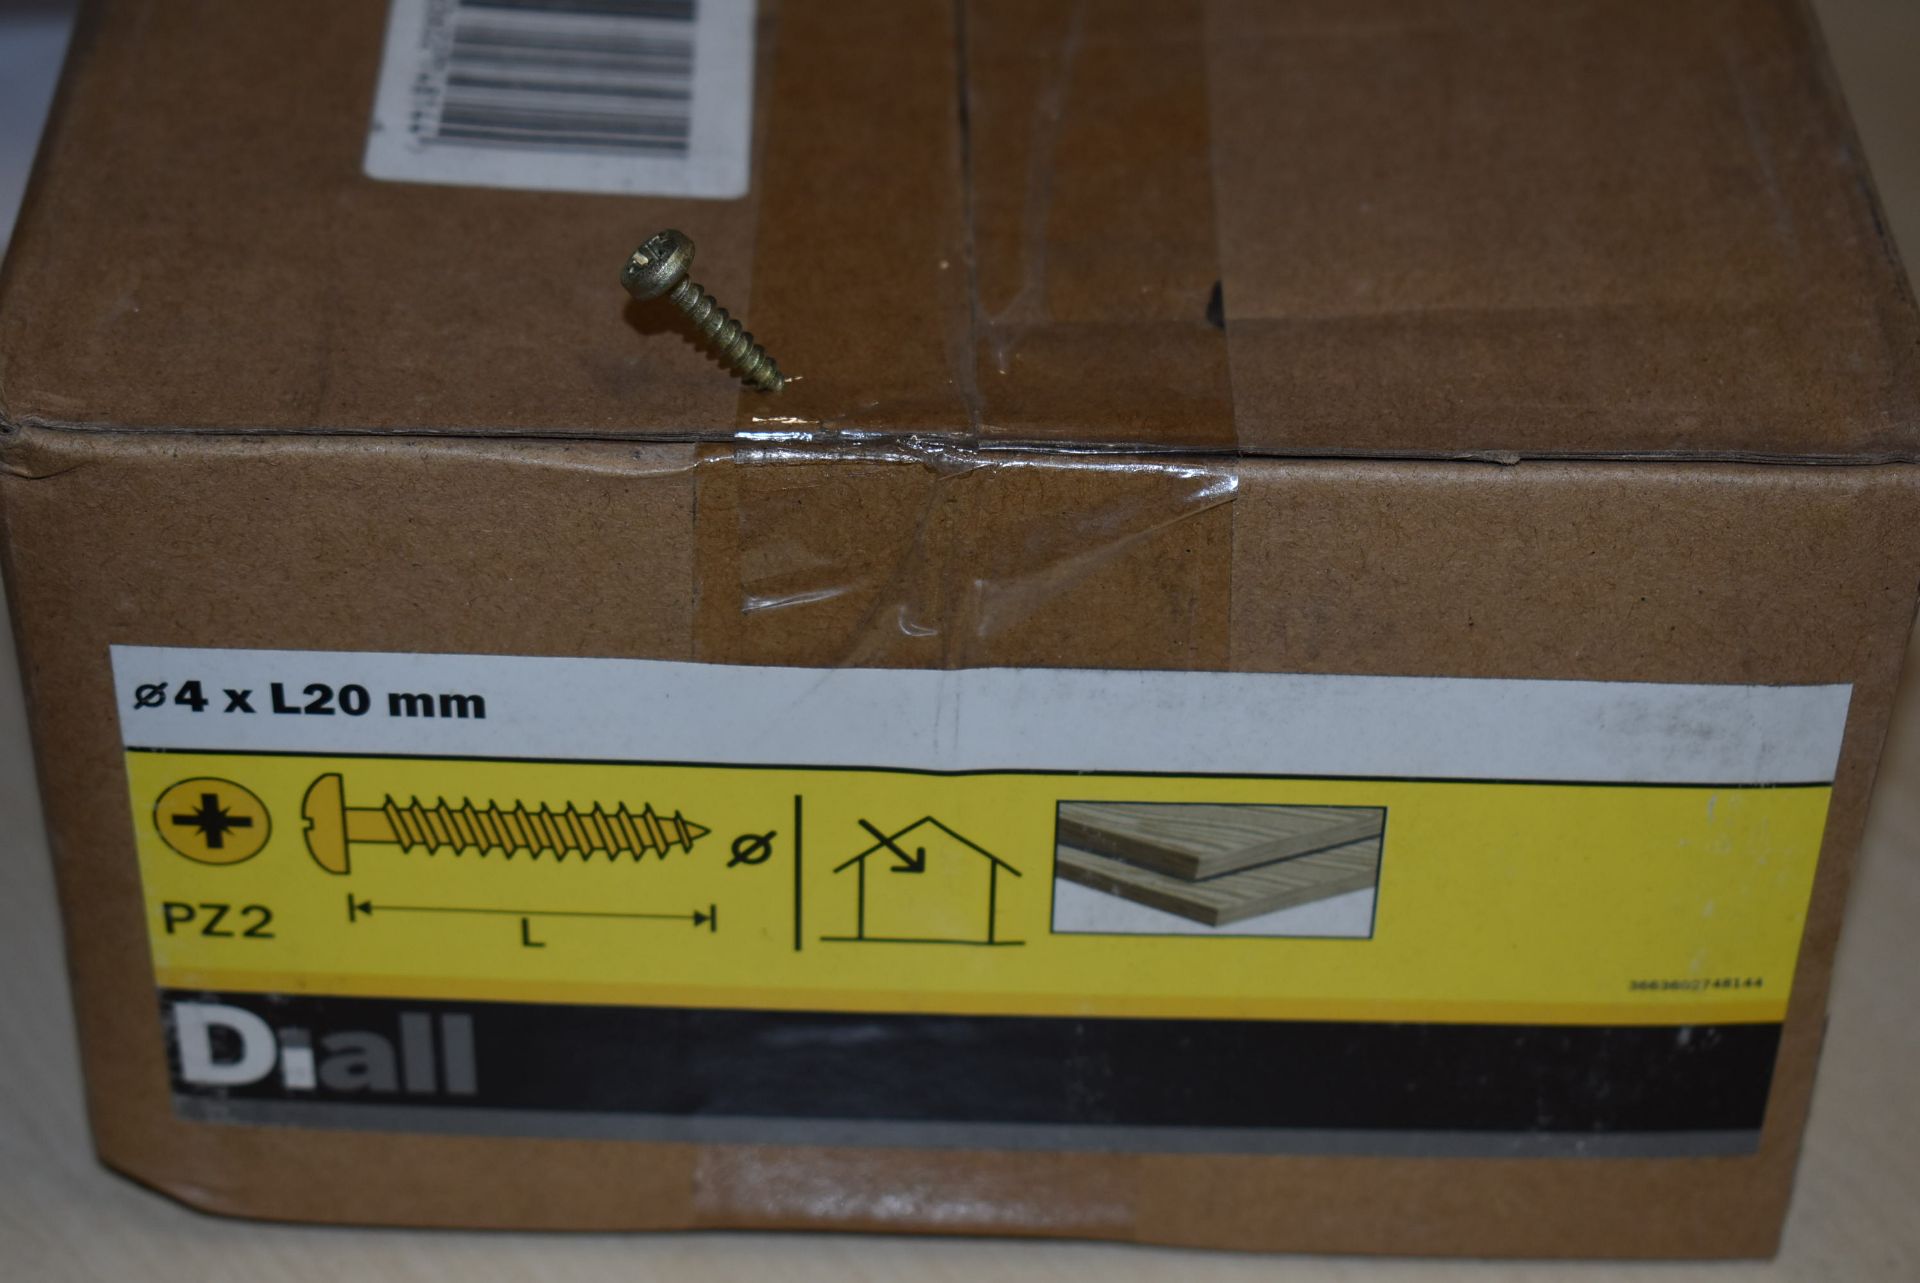 Three Boxes of Diall 4x20mm PZ2 Screws